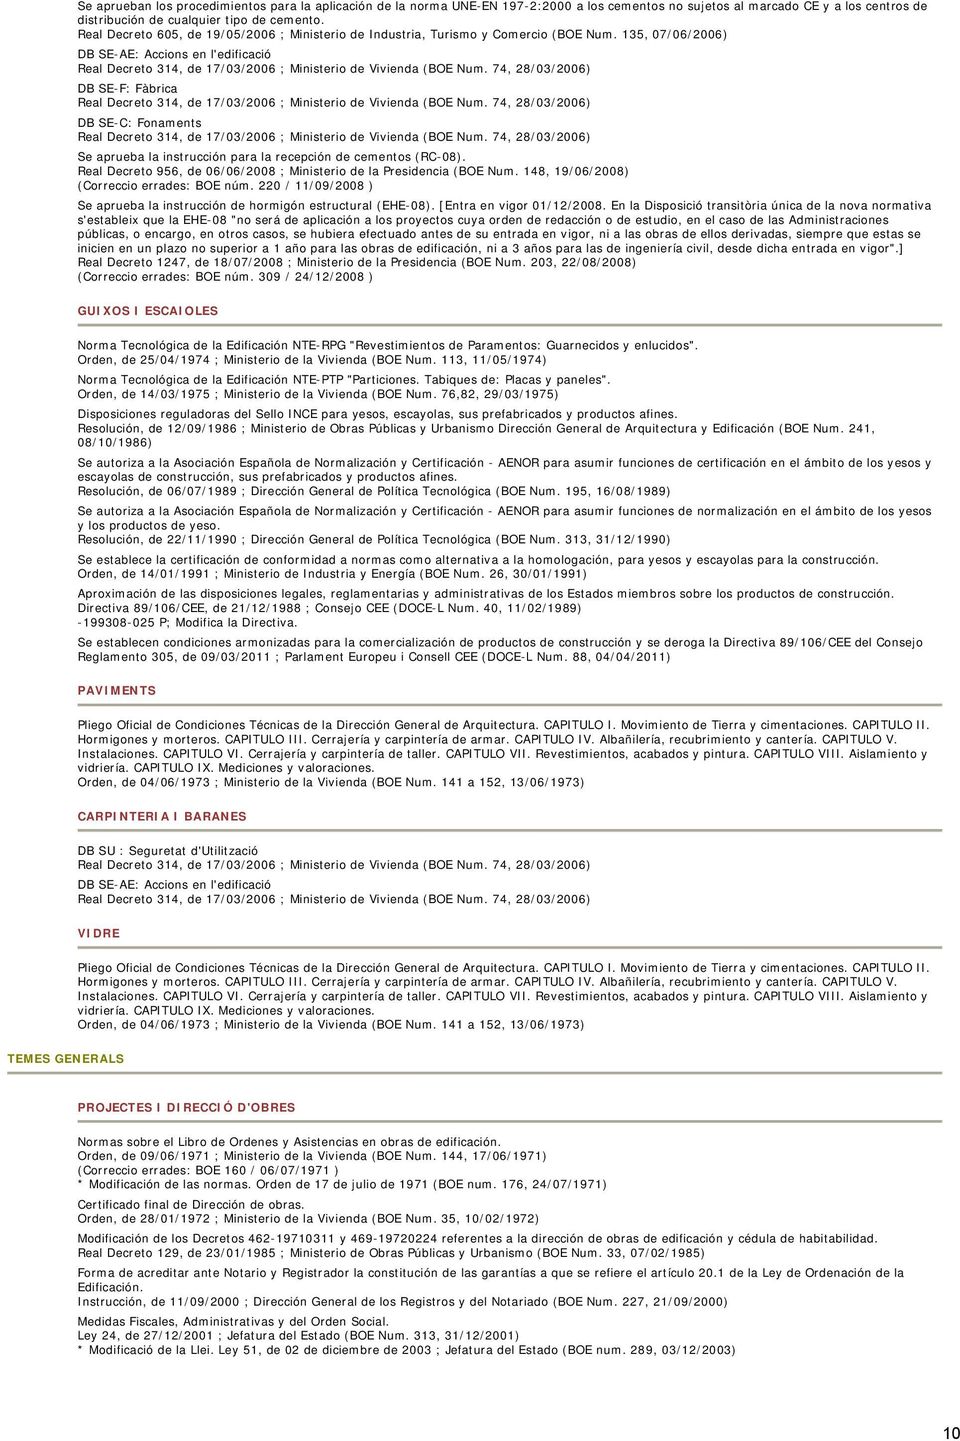 135, 07/06/2006) DB SE-AE: Accions en l'edificació Real Decreto 314, de 17/03/2006 ; Ministerio de Vivienda (BOE Num.